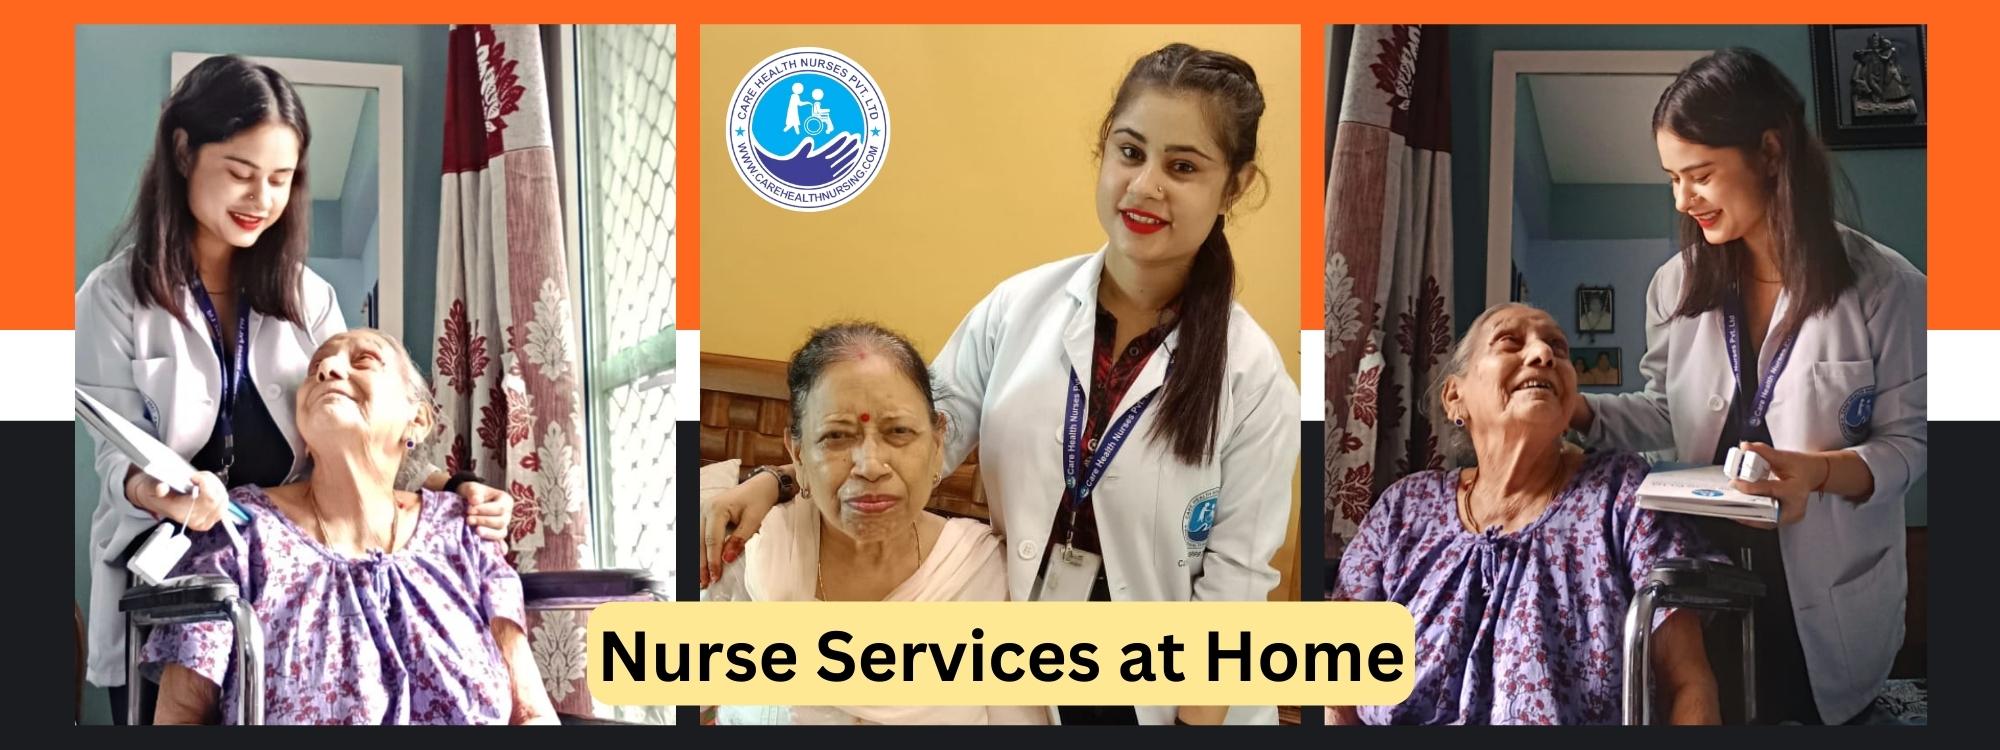 Nurse services at home